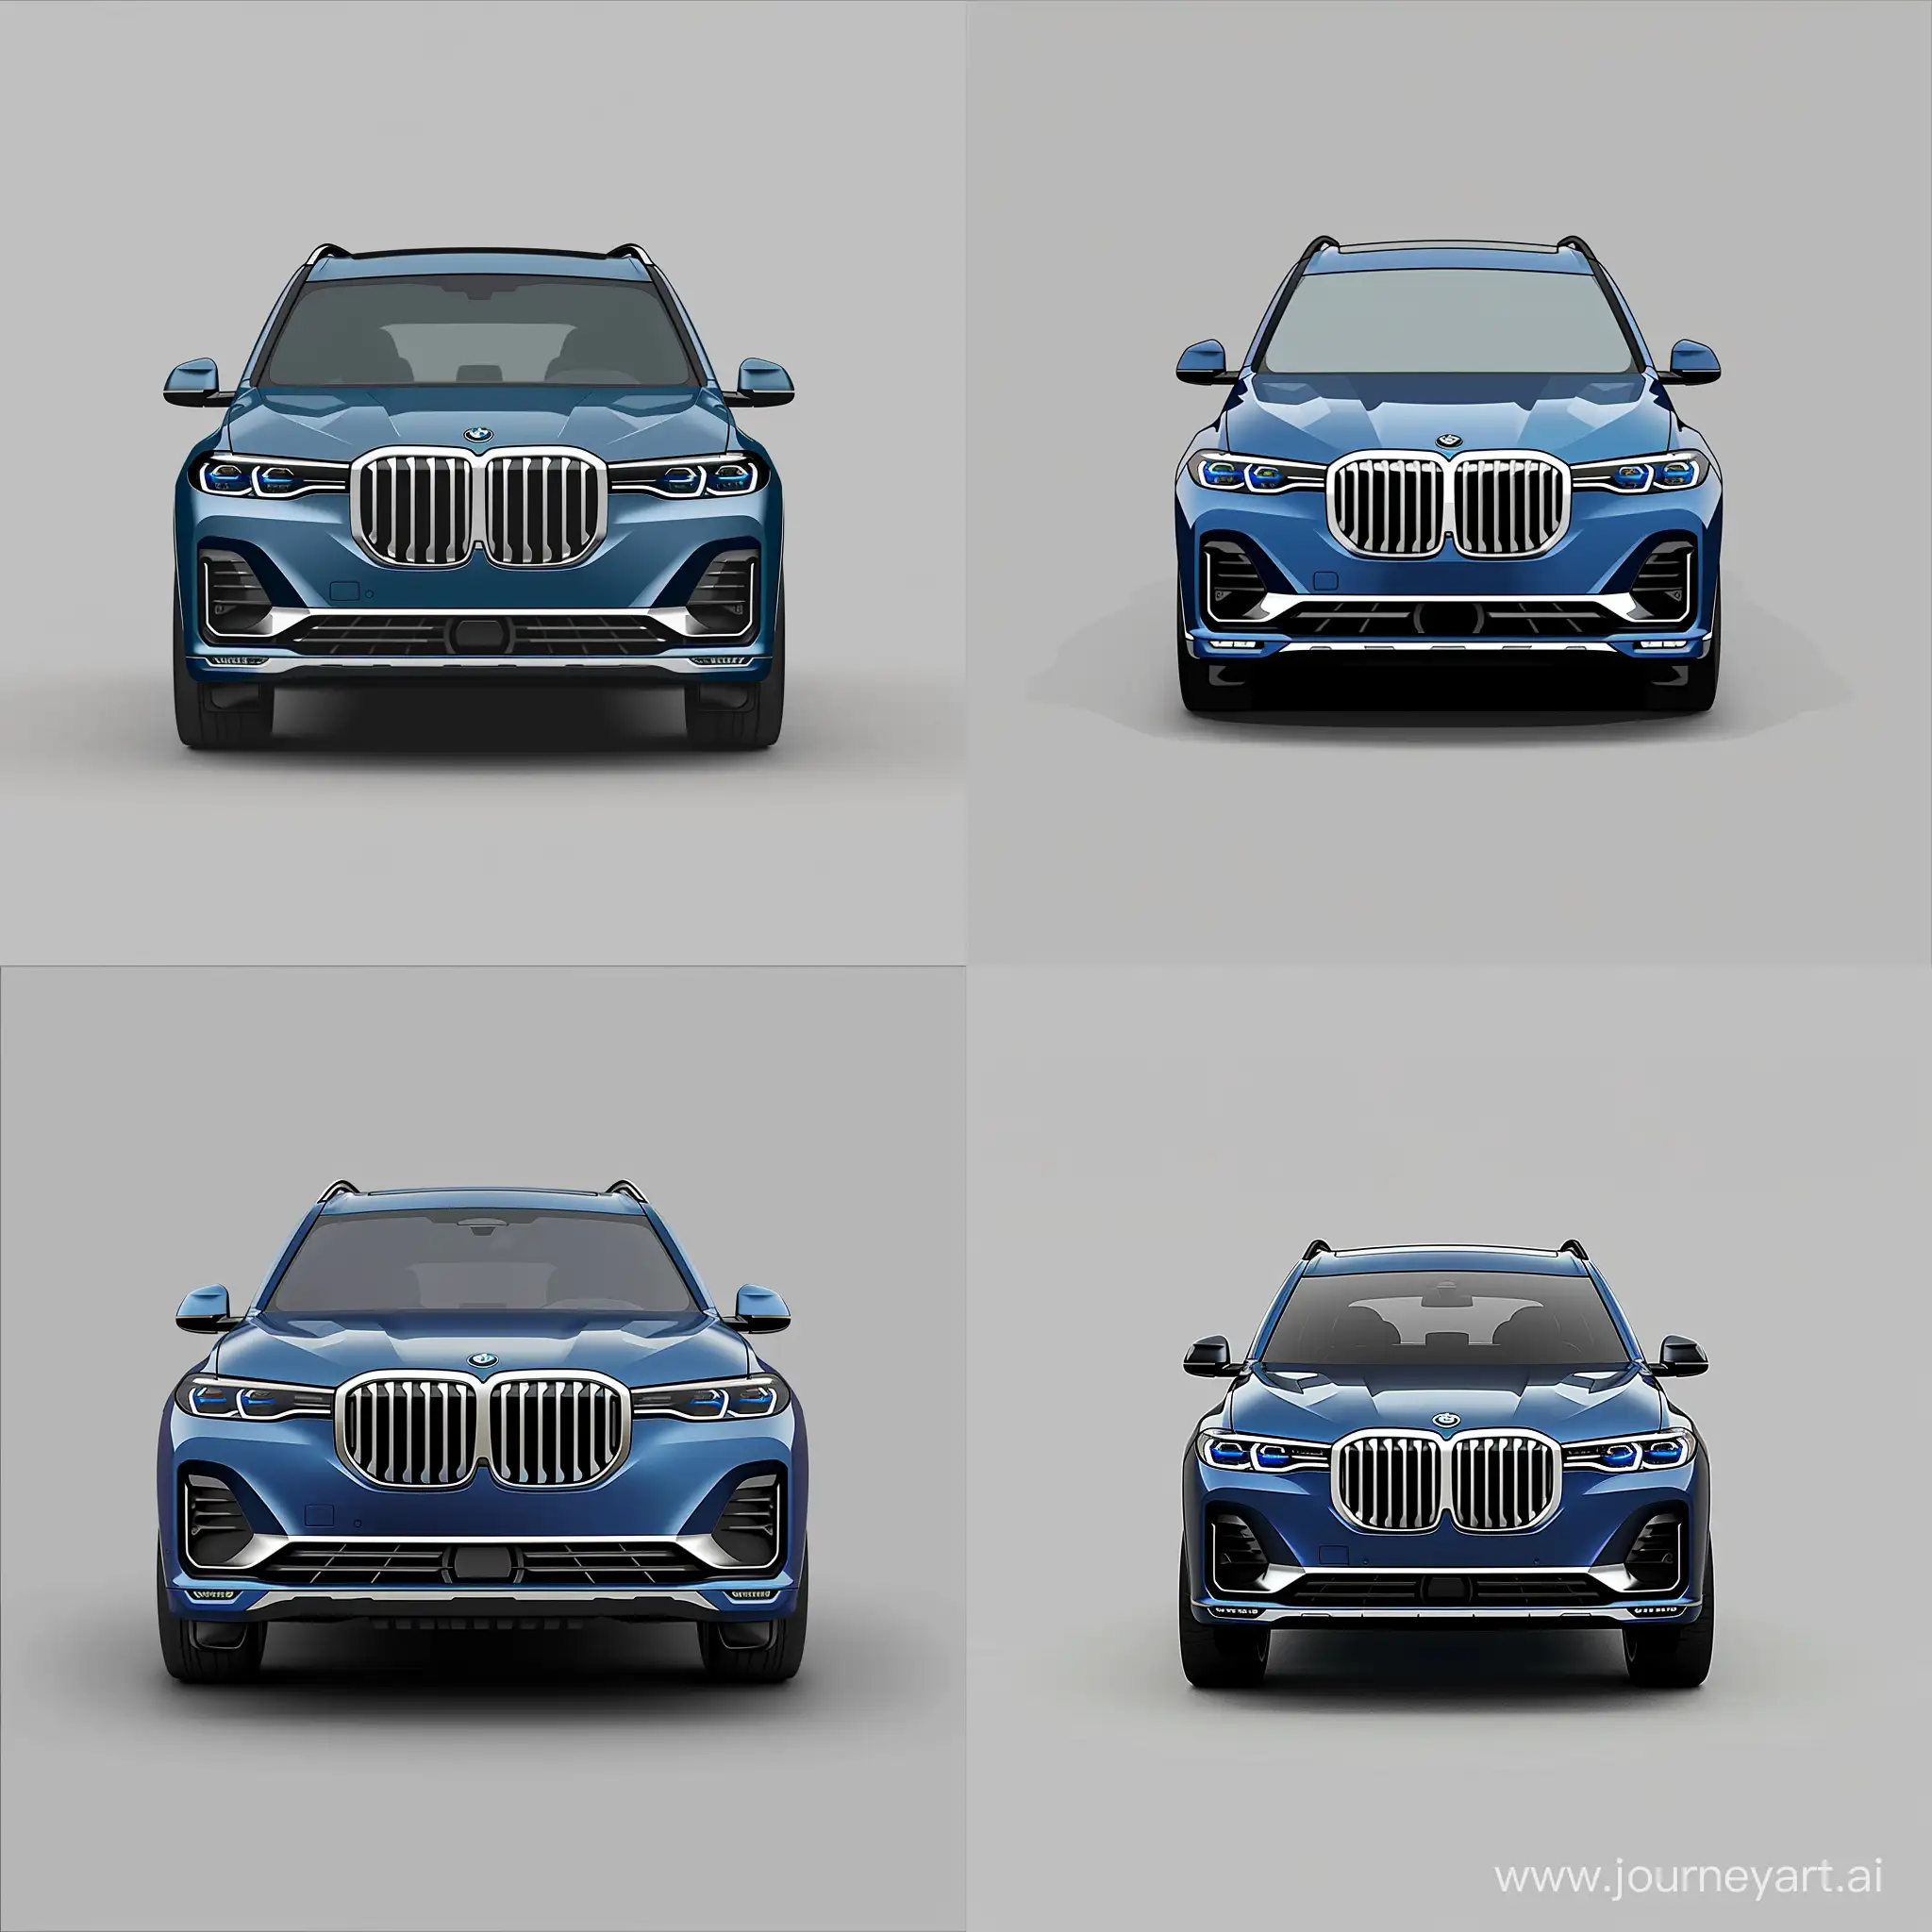 Minimalist-2D-Illustration-BMW-X7-Front-View-in-Striking-Blue